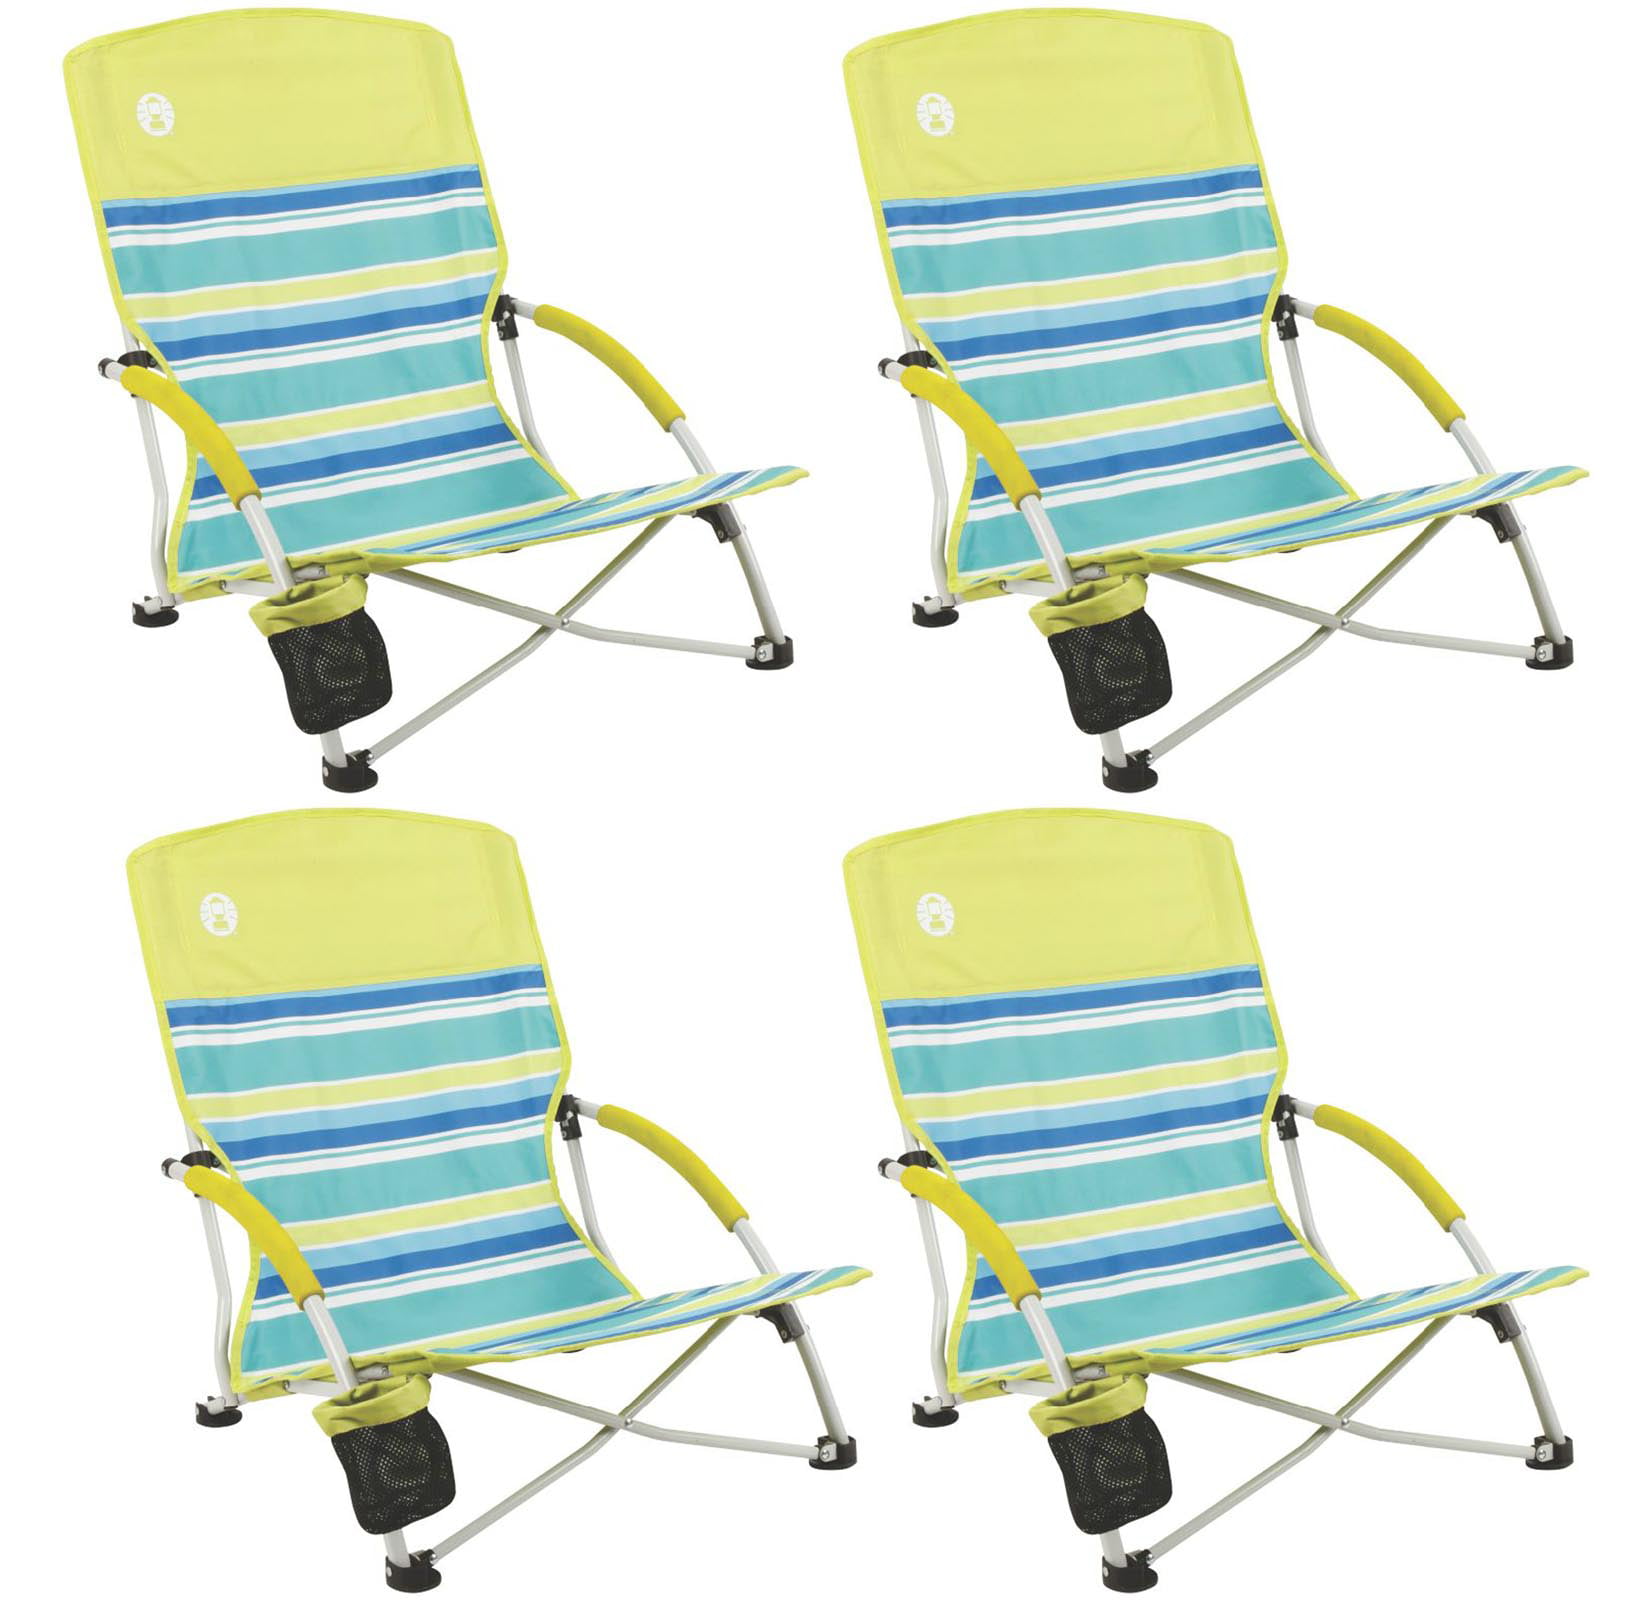 4 Coleman Utopia Breeze Beach Sling Camping Chairs W Cup Holder Carry Bag Walmartcom Walmartcom